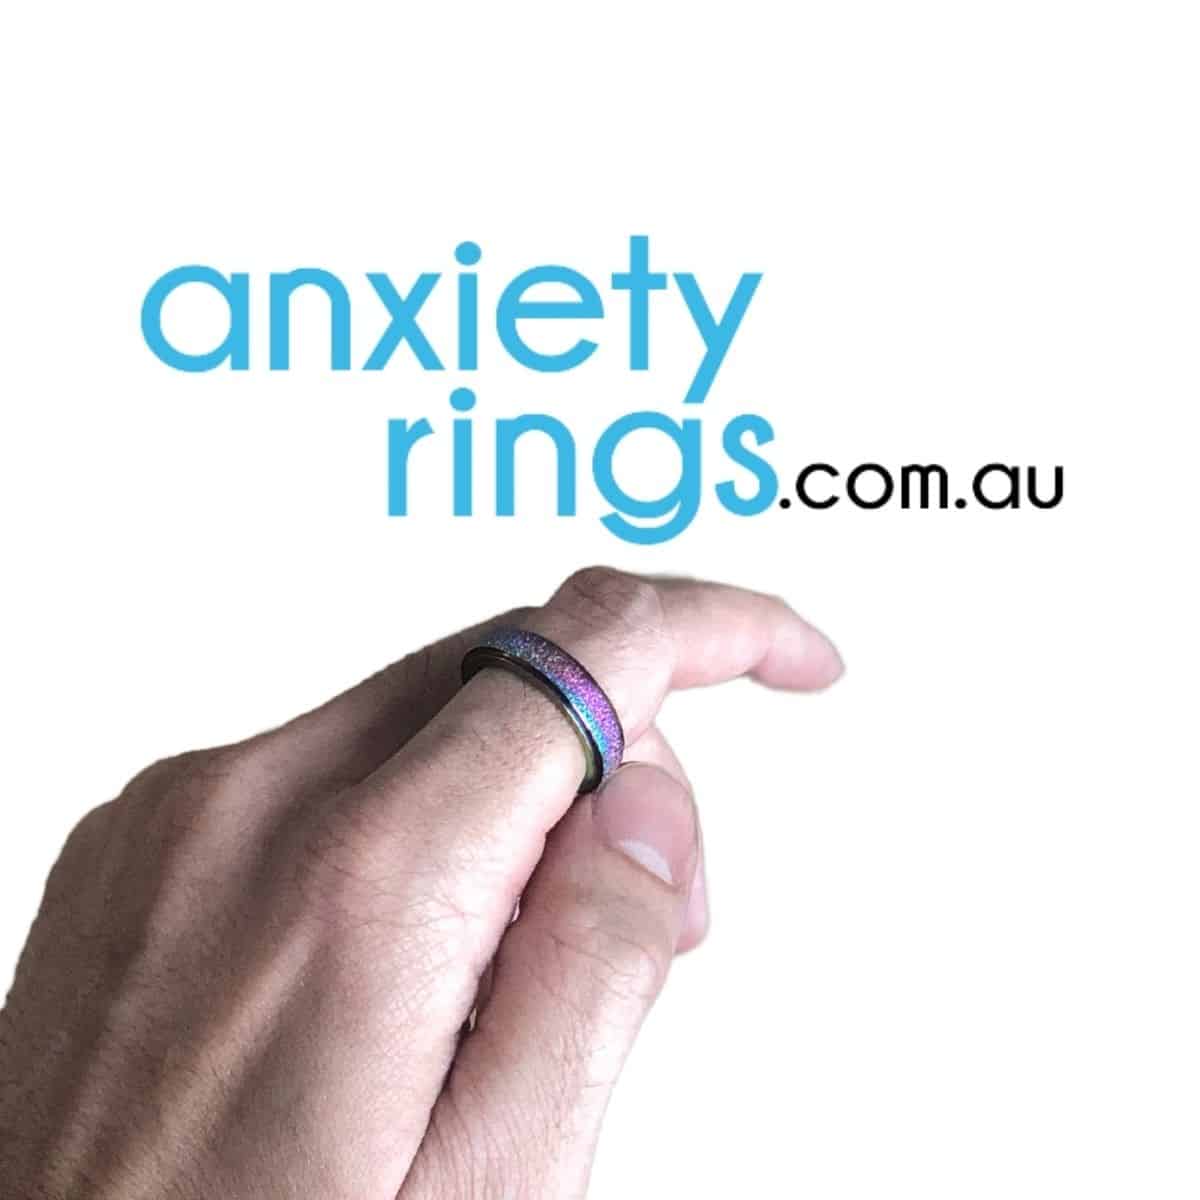 Anxiety Rings Australia